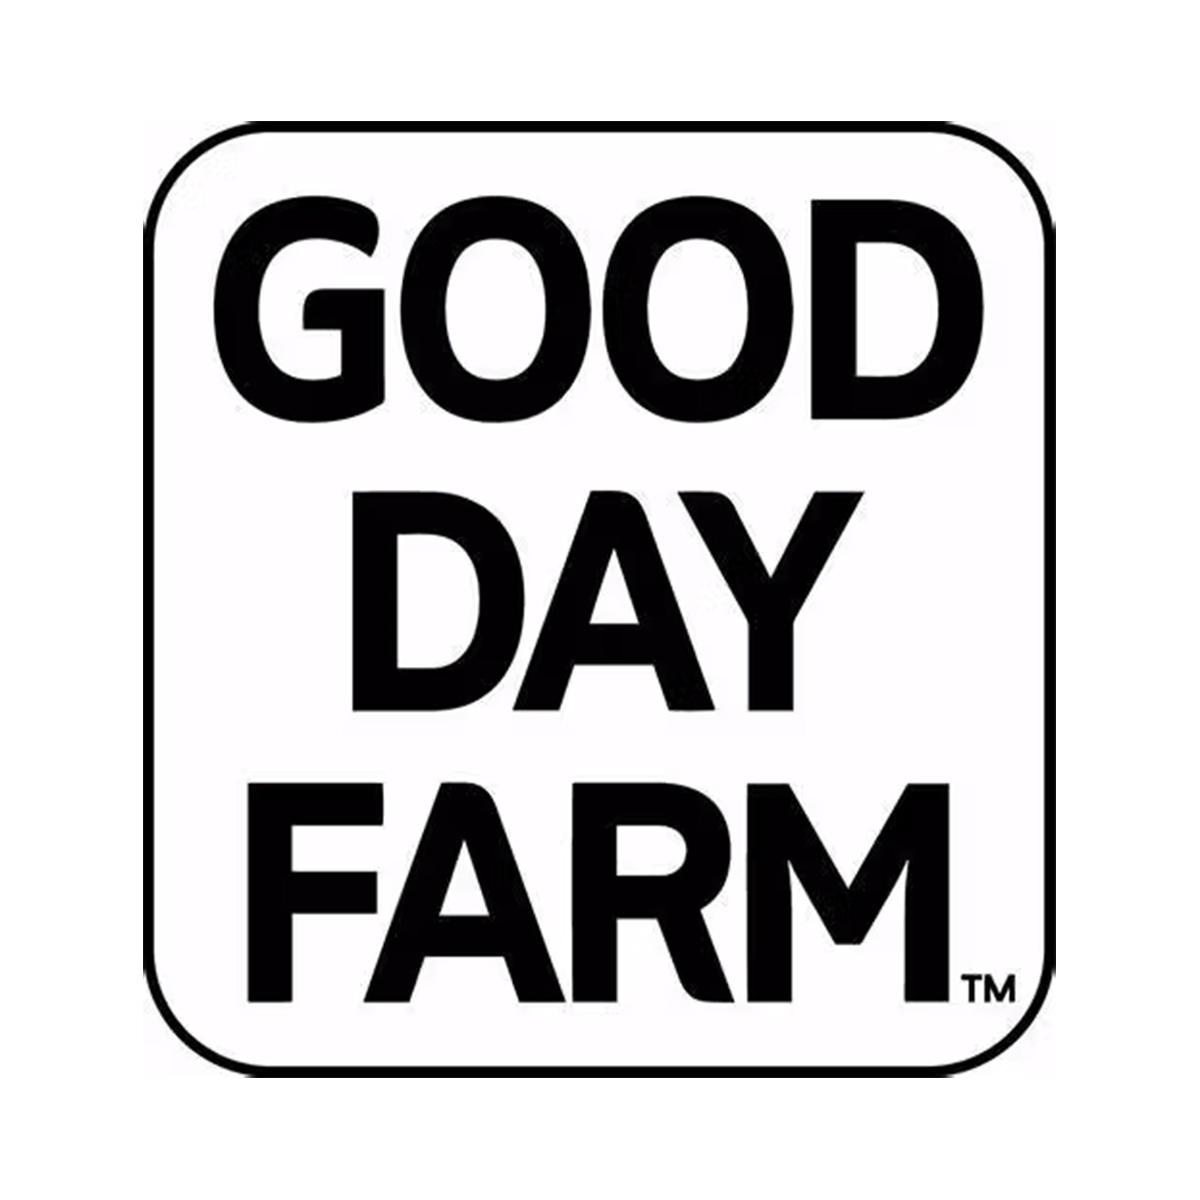 Image Credit: Good Day Farm